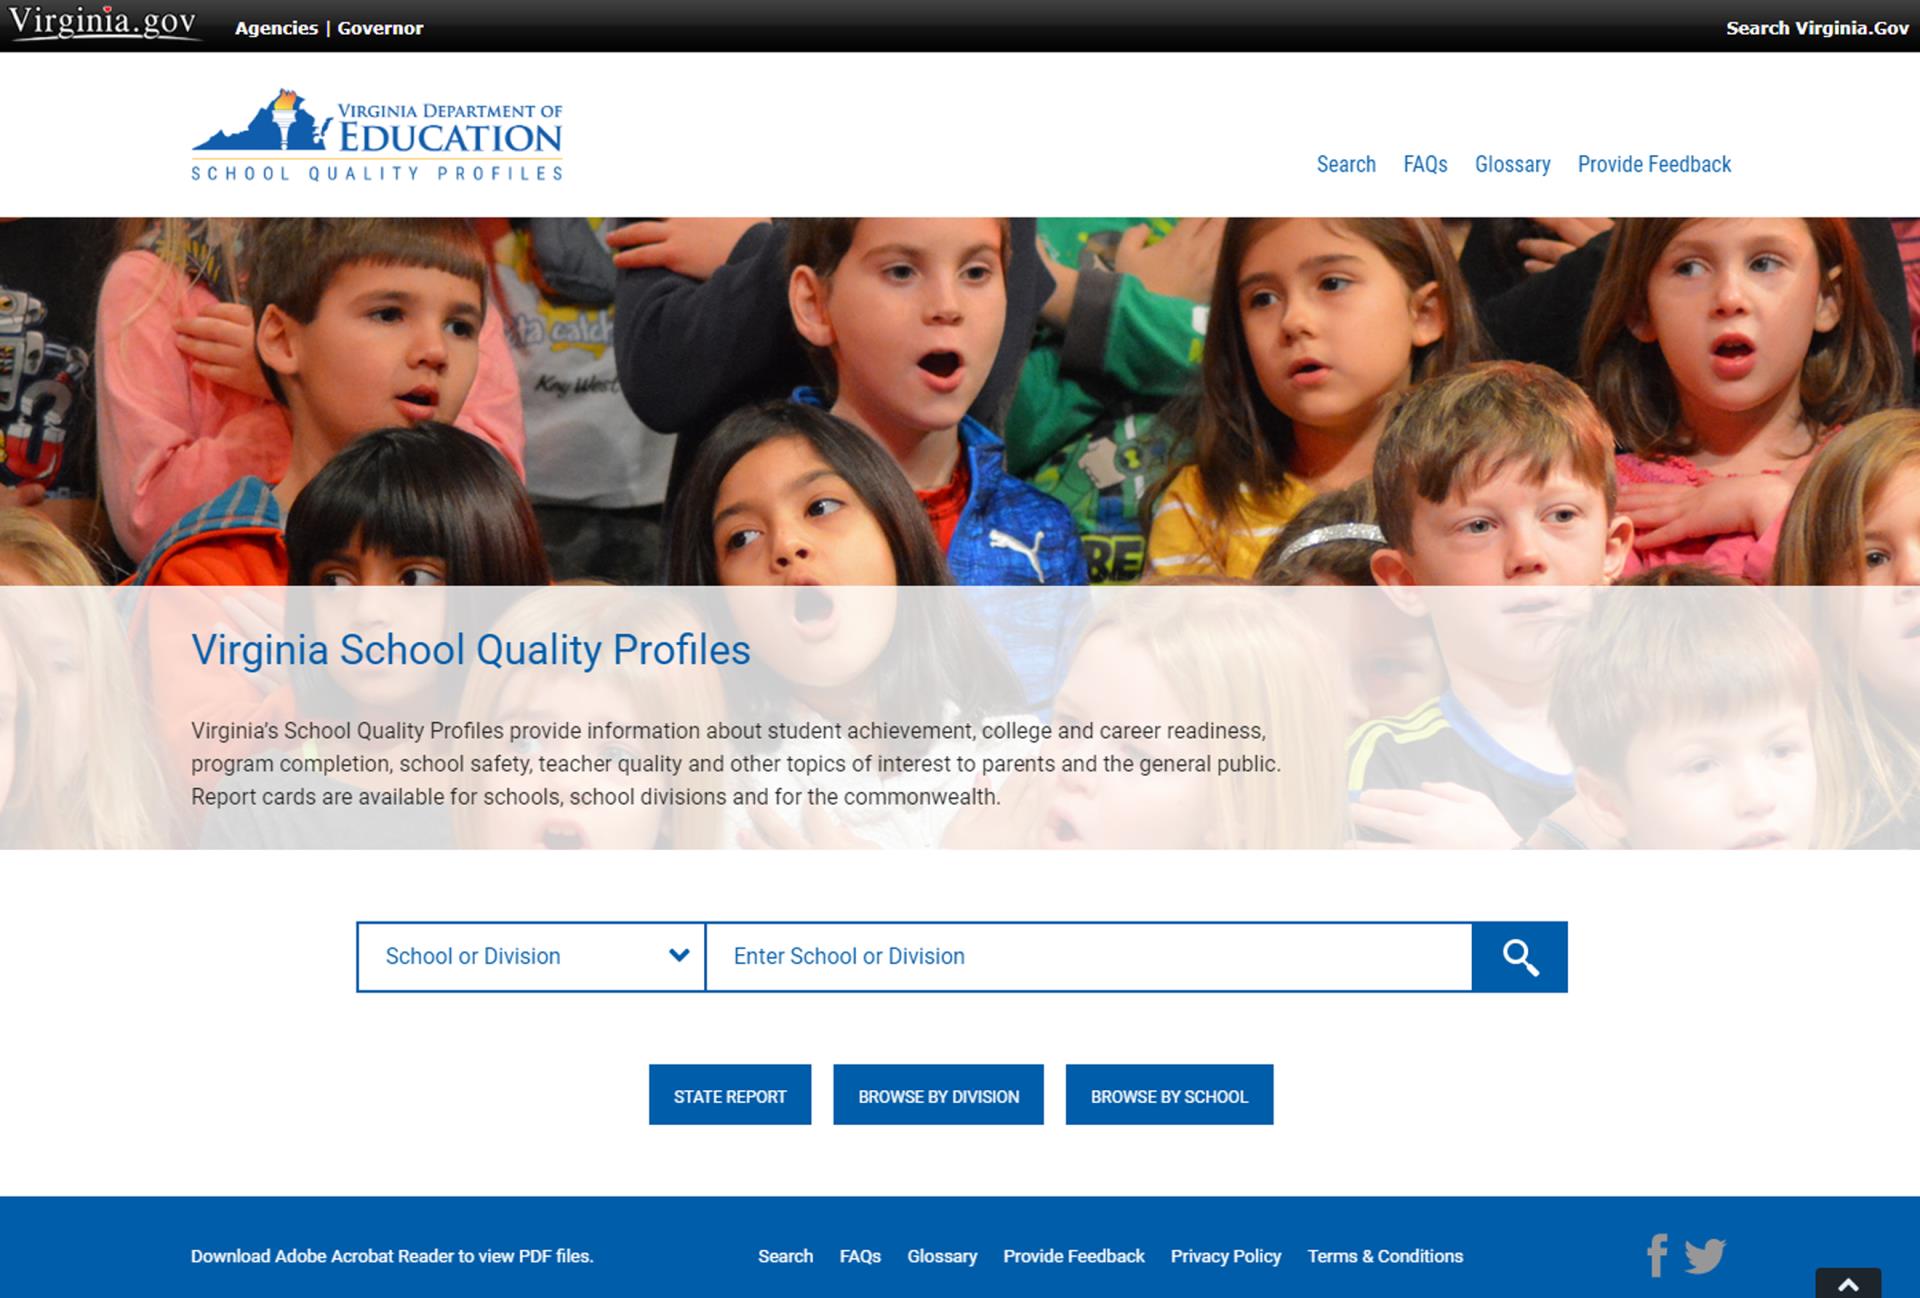 School Quality Profiles Website